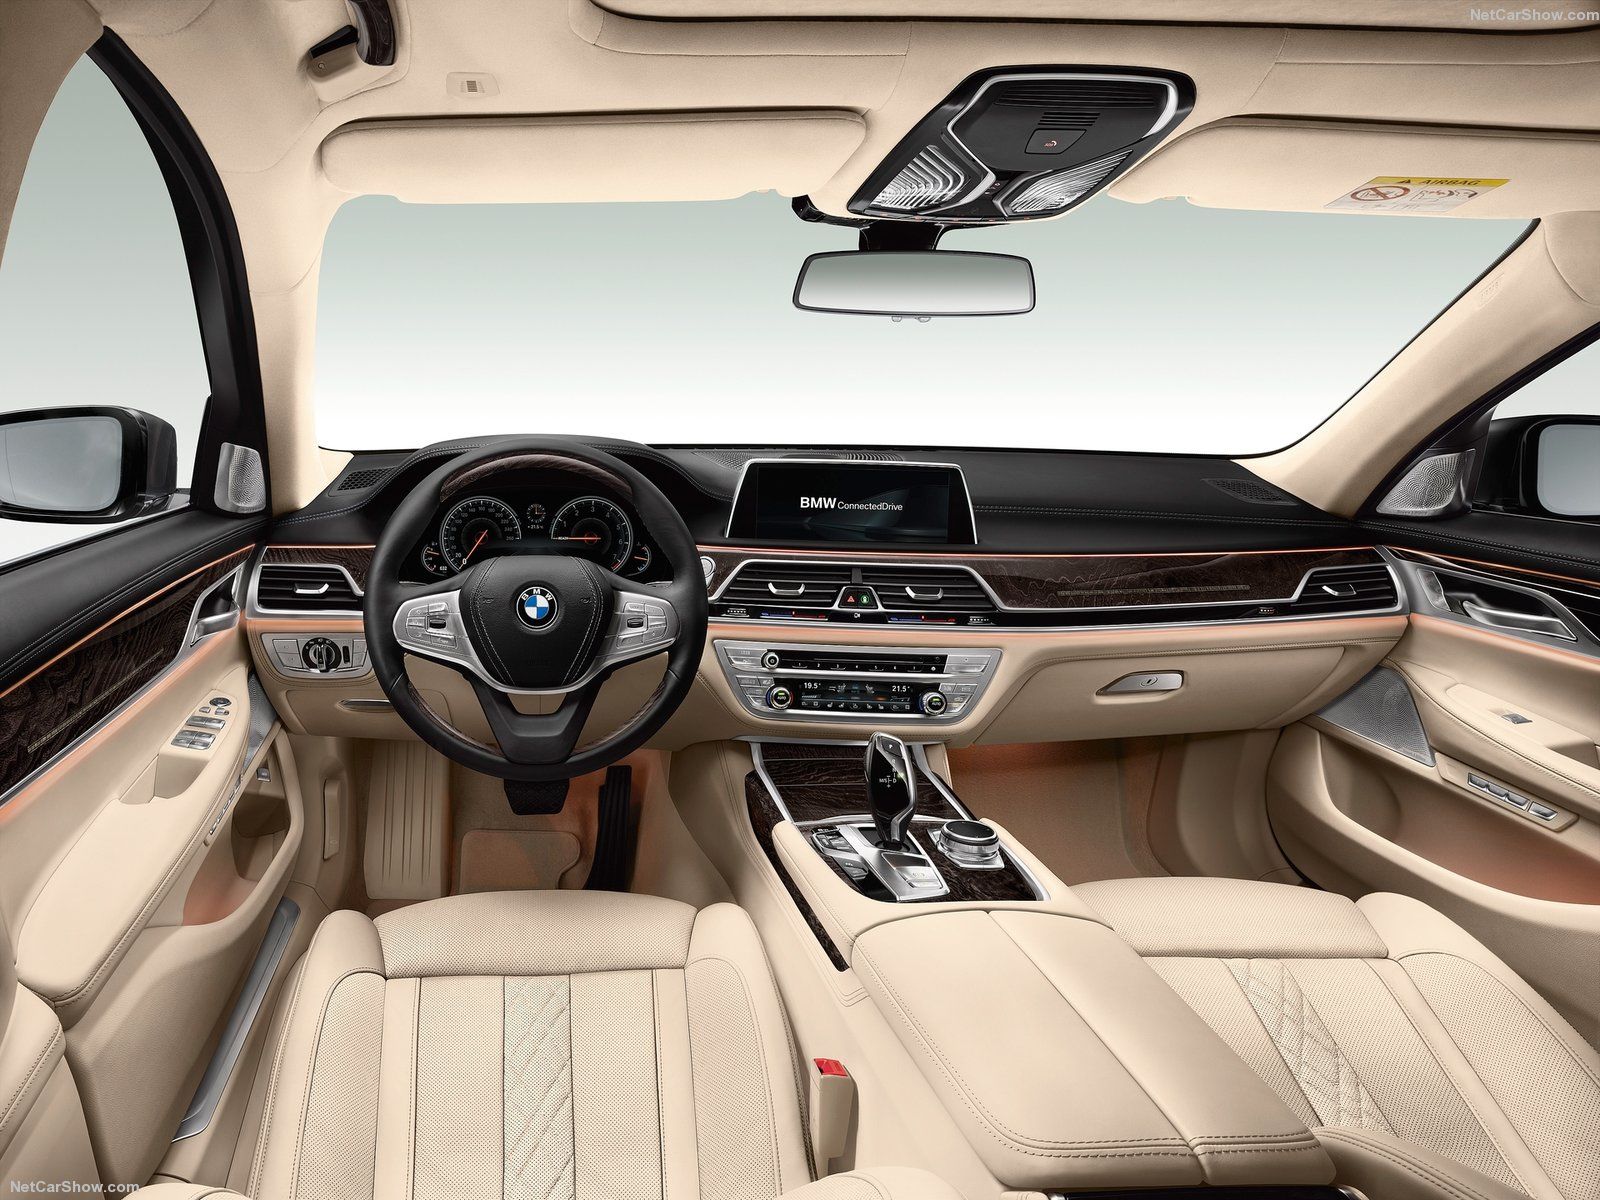 2015 BMW 7series interior